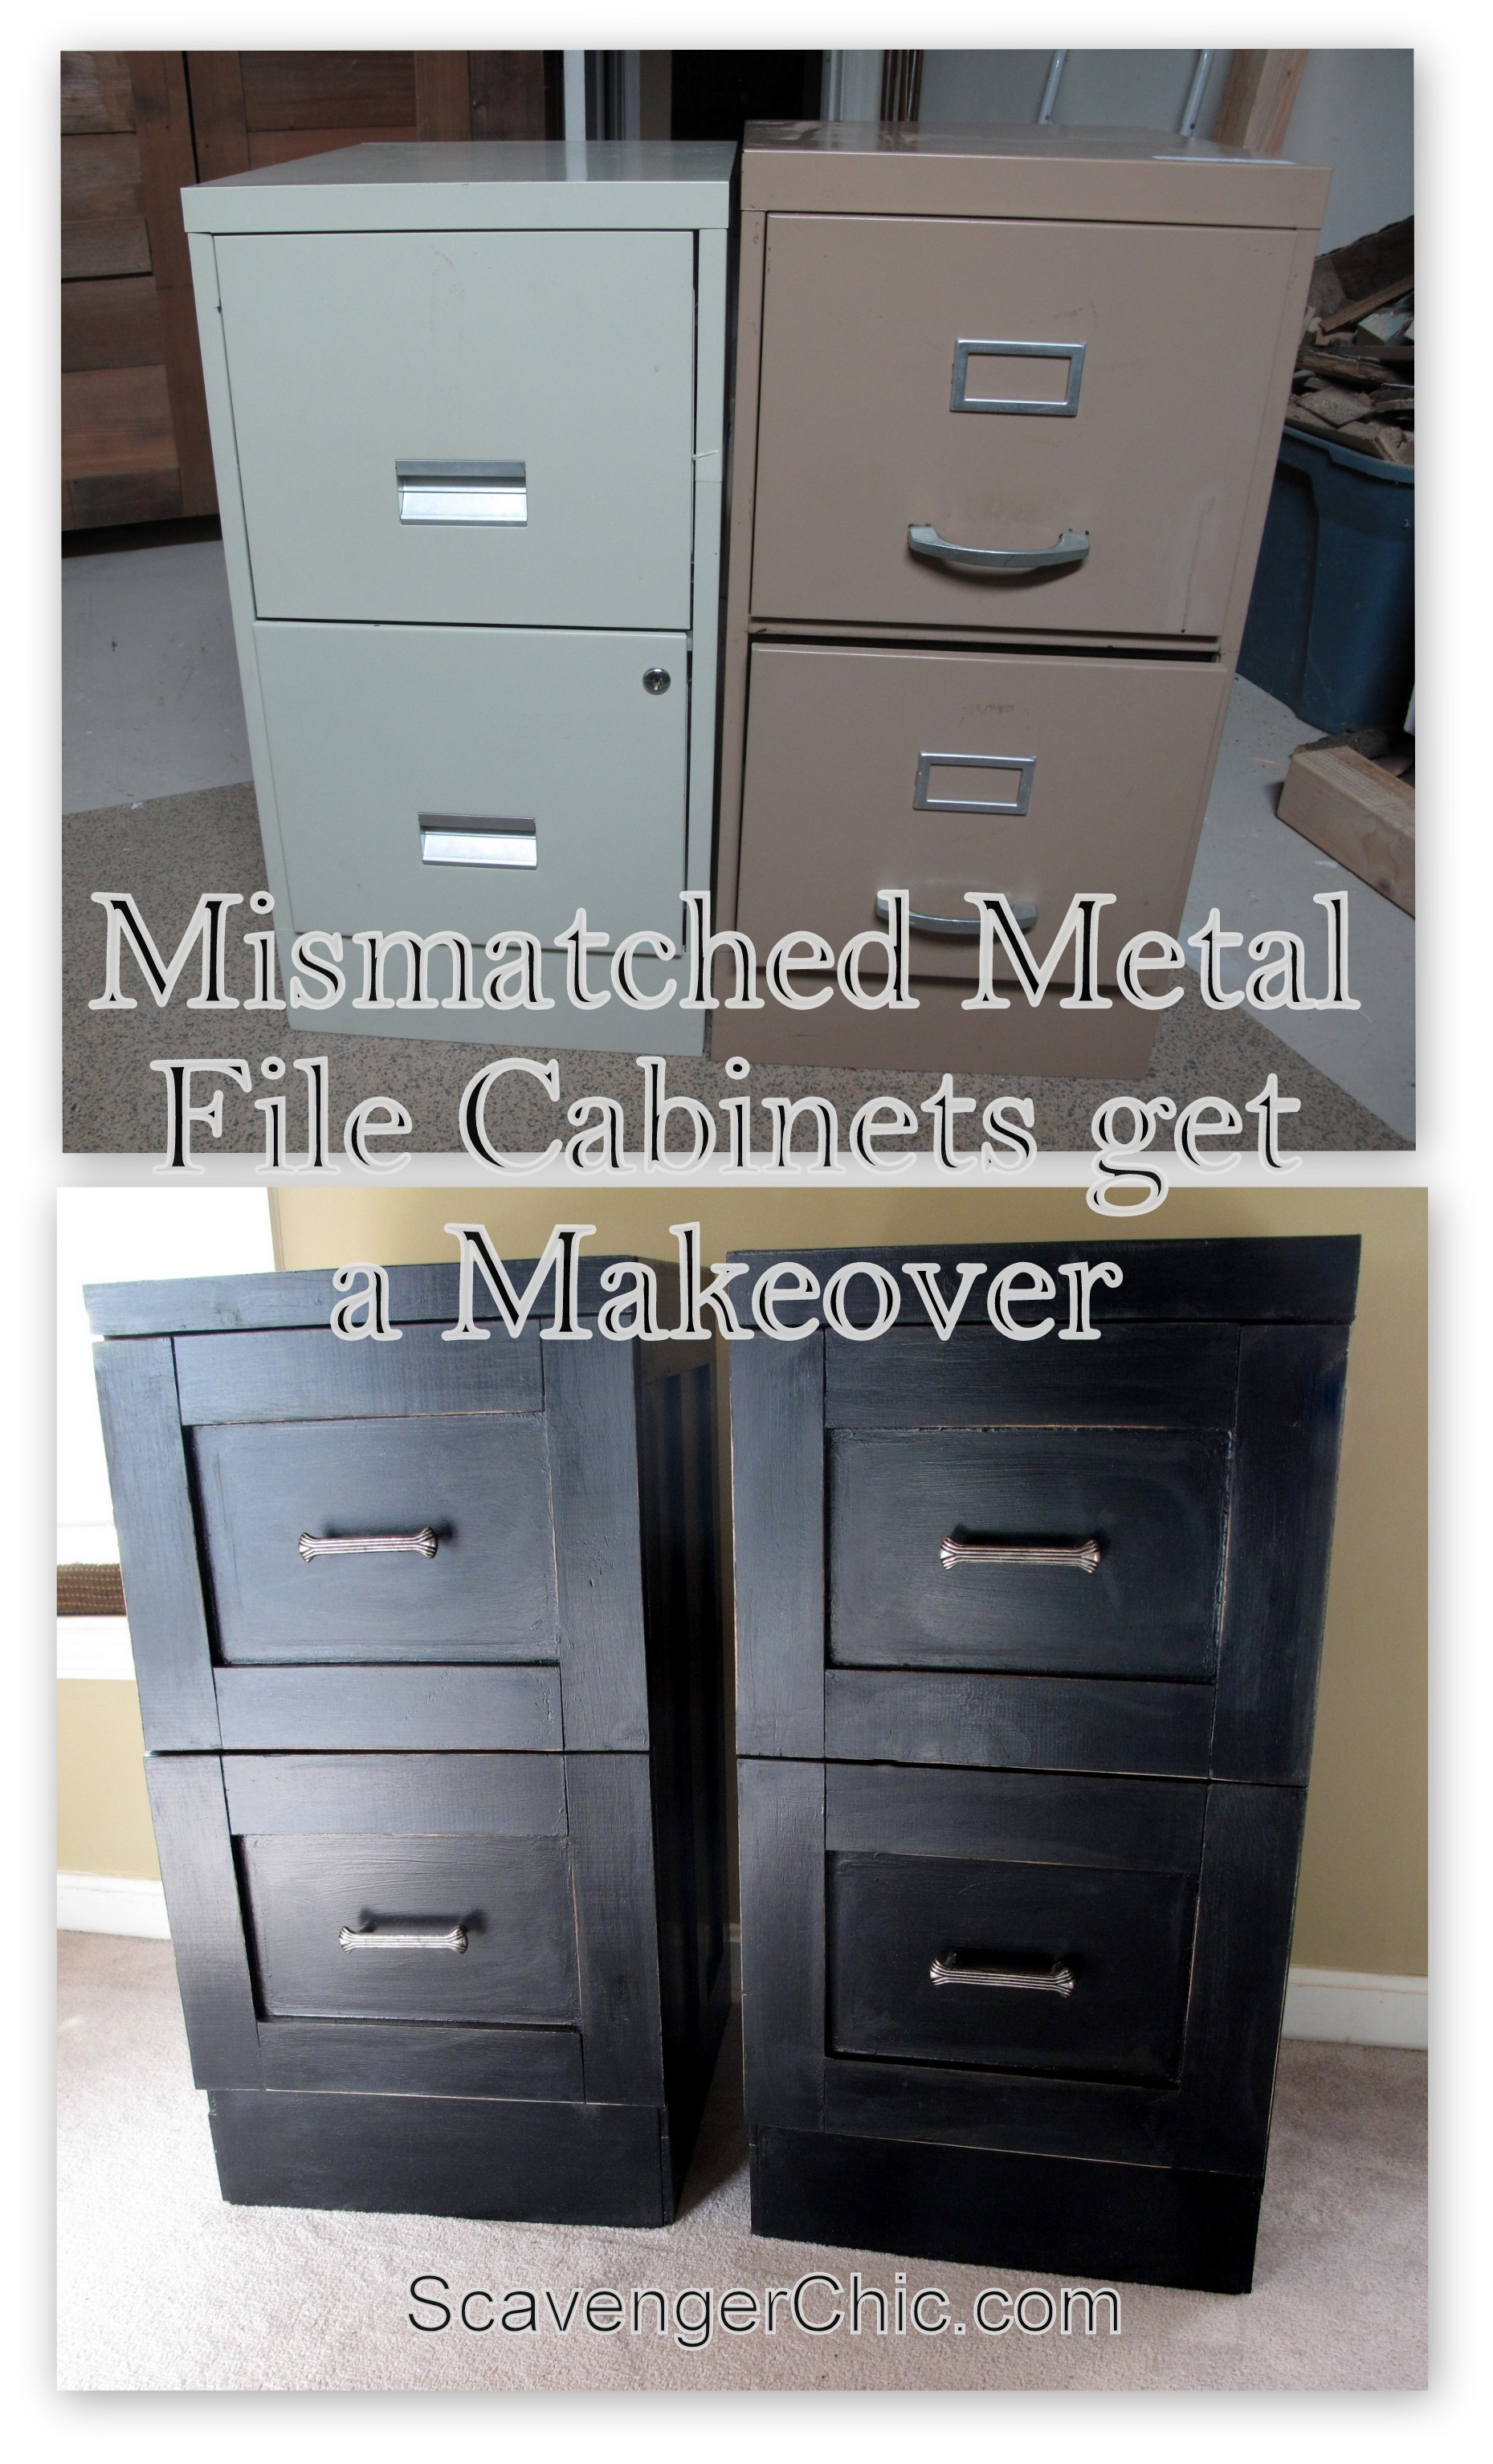 Mismatched Metal File Cabinets Get A Makeover Scavenger Chic regarding size 1859 X 3069